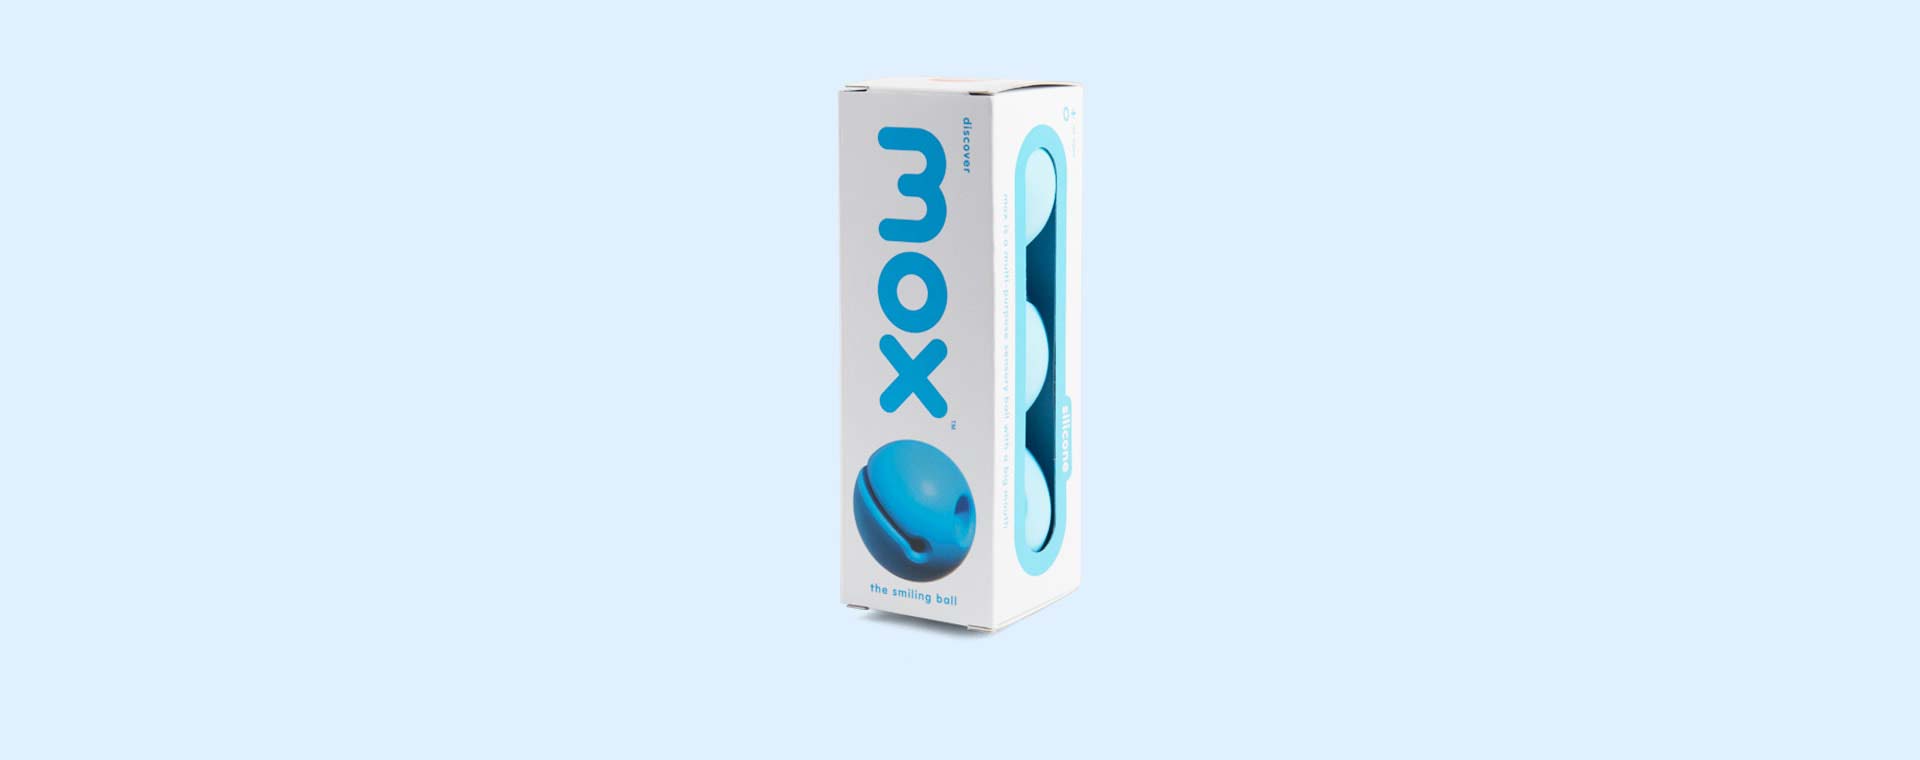 Blue Moluk Mox Balls 3 Pack